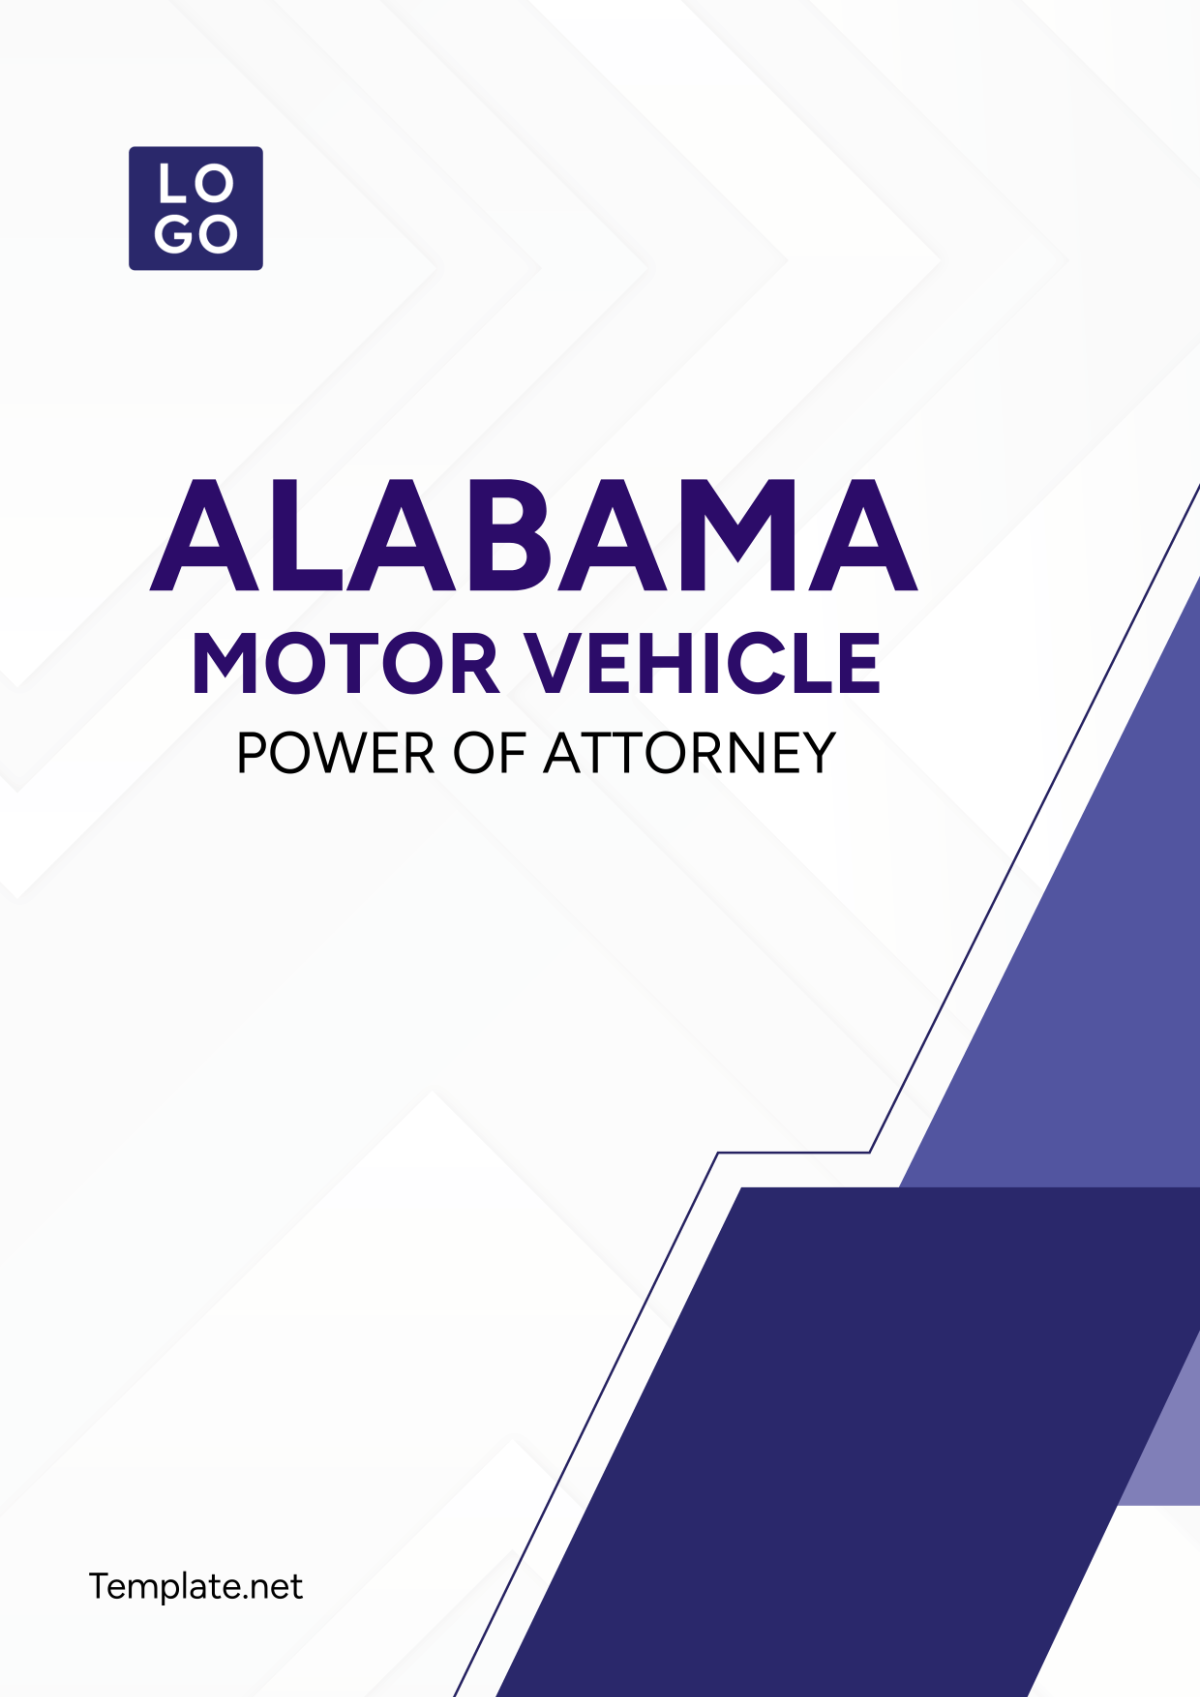 Alabama Motor Vehicle Power of Attorney Template